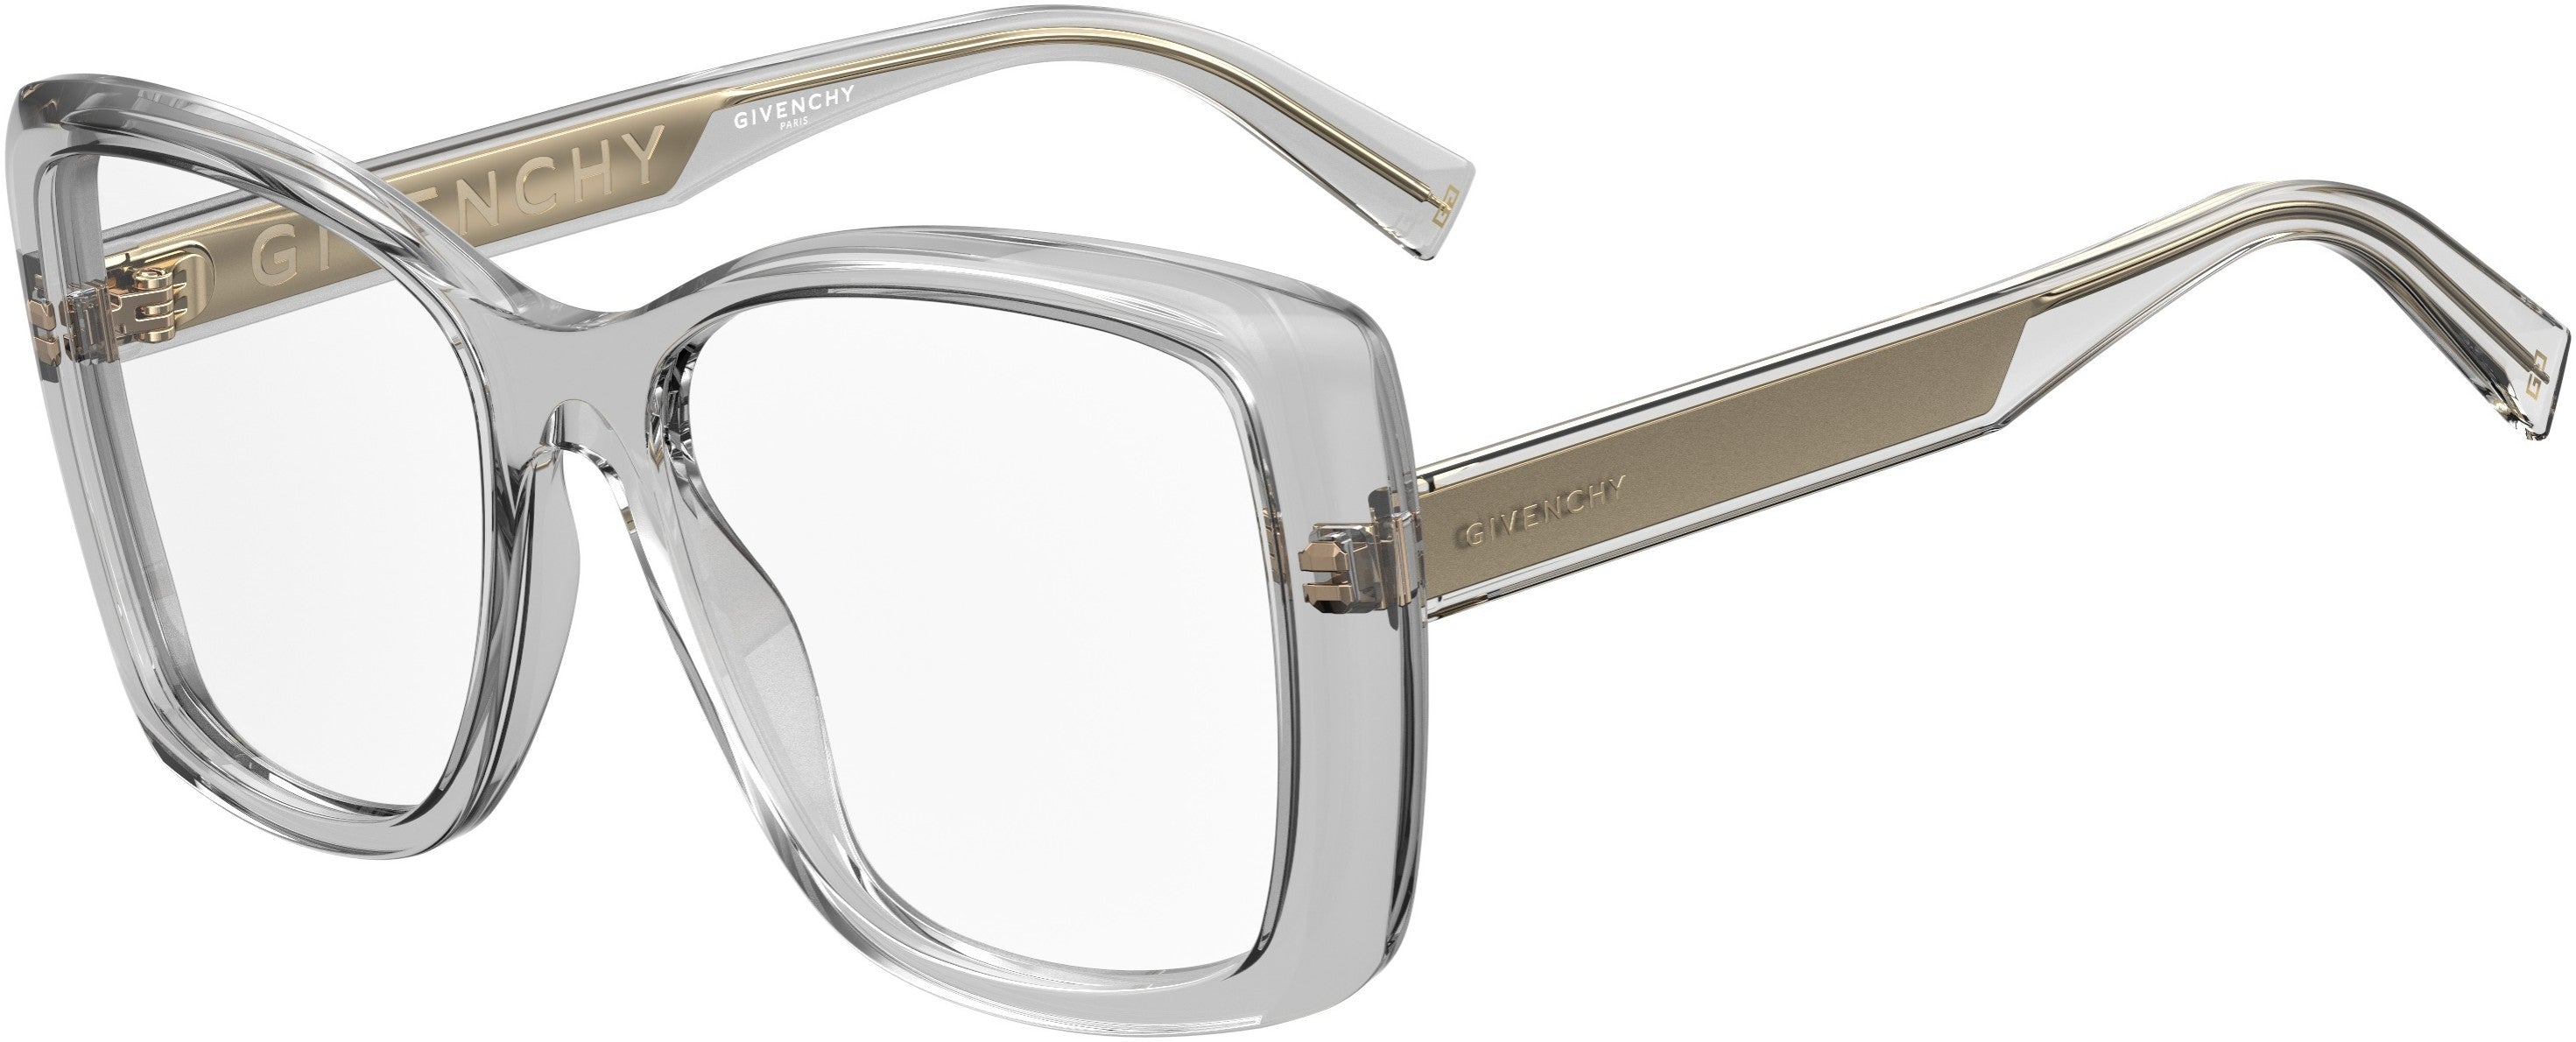  Givenchy 0135 Square Eyeglasses 0KB7-0KB7  Gray (00 Demo Lens)